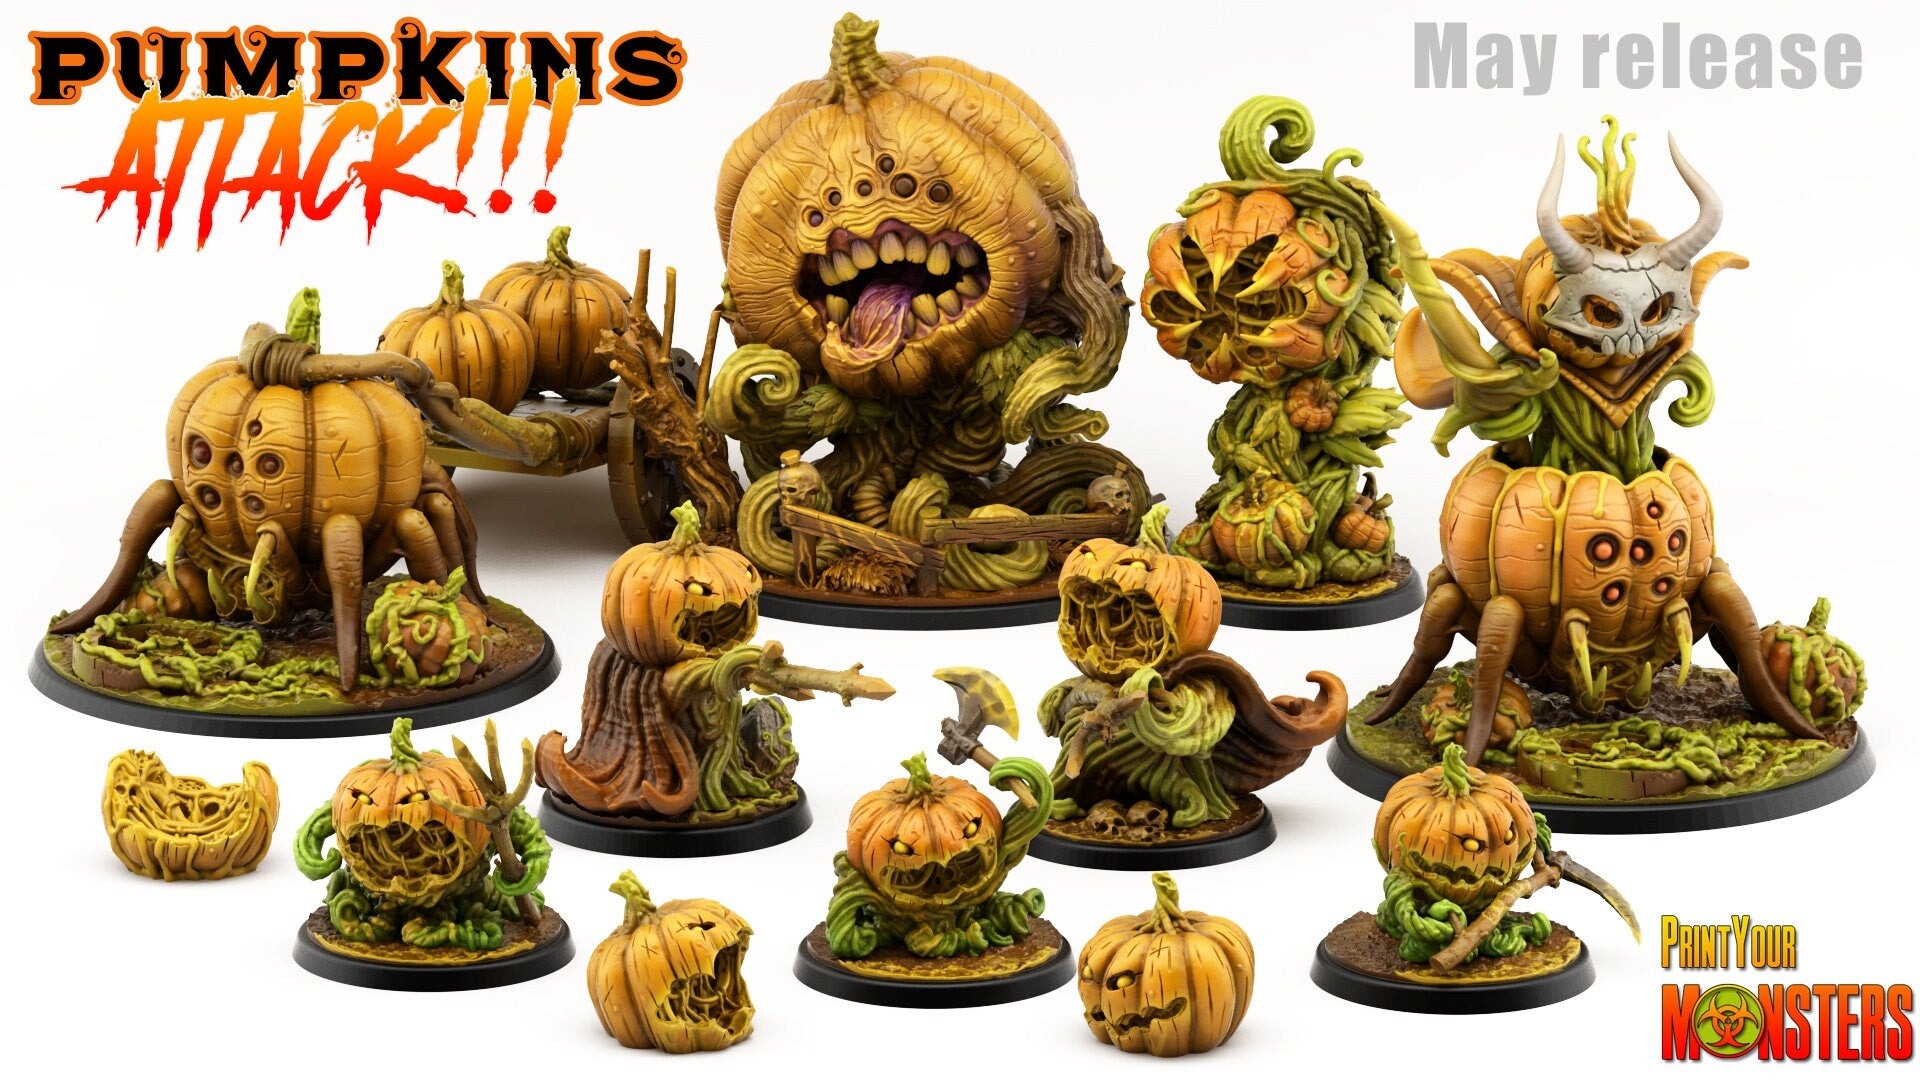 Pumpkin Soldiers - Print Your Monsters 